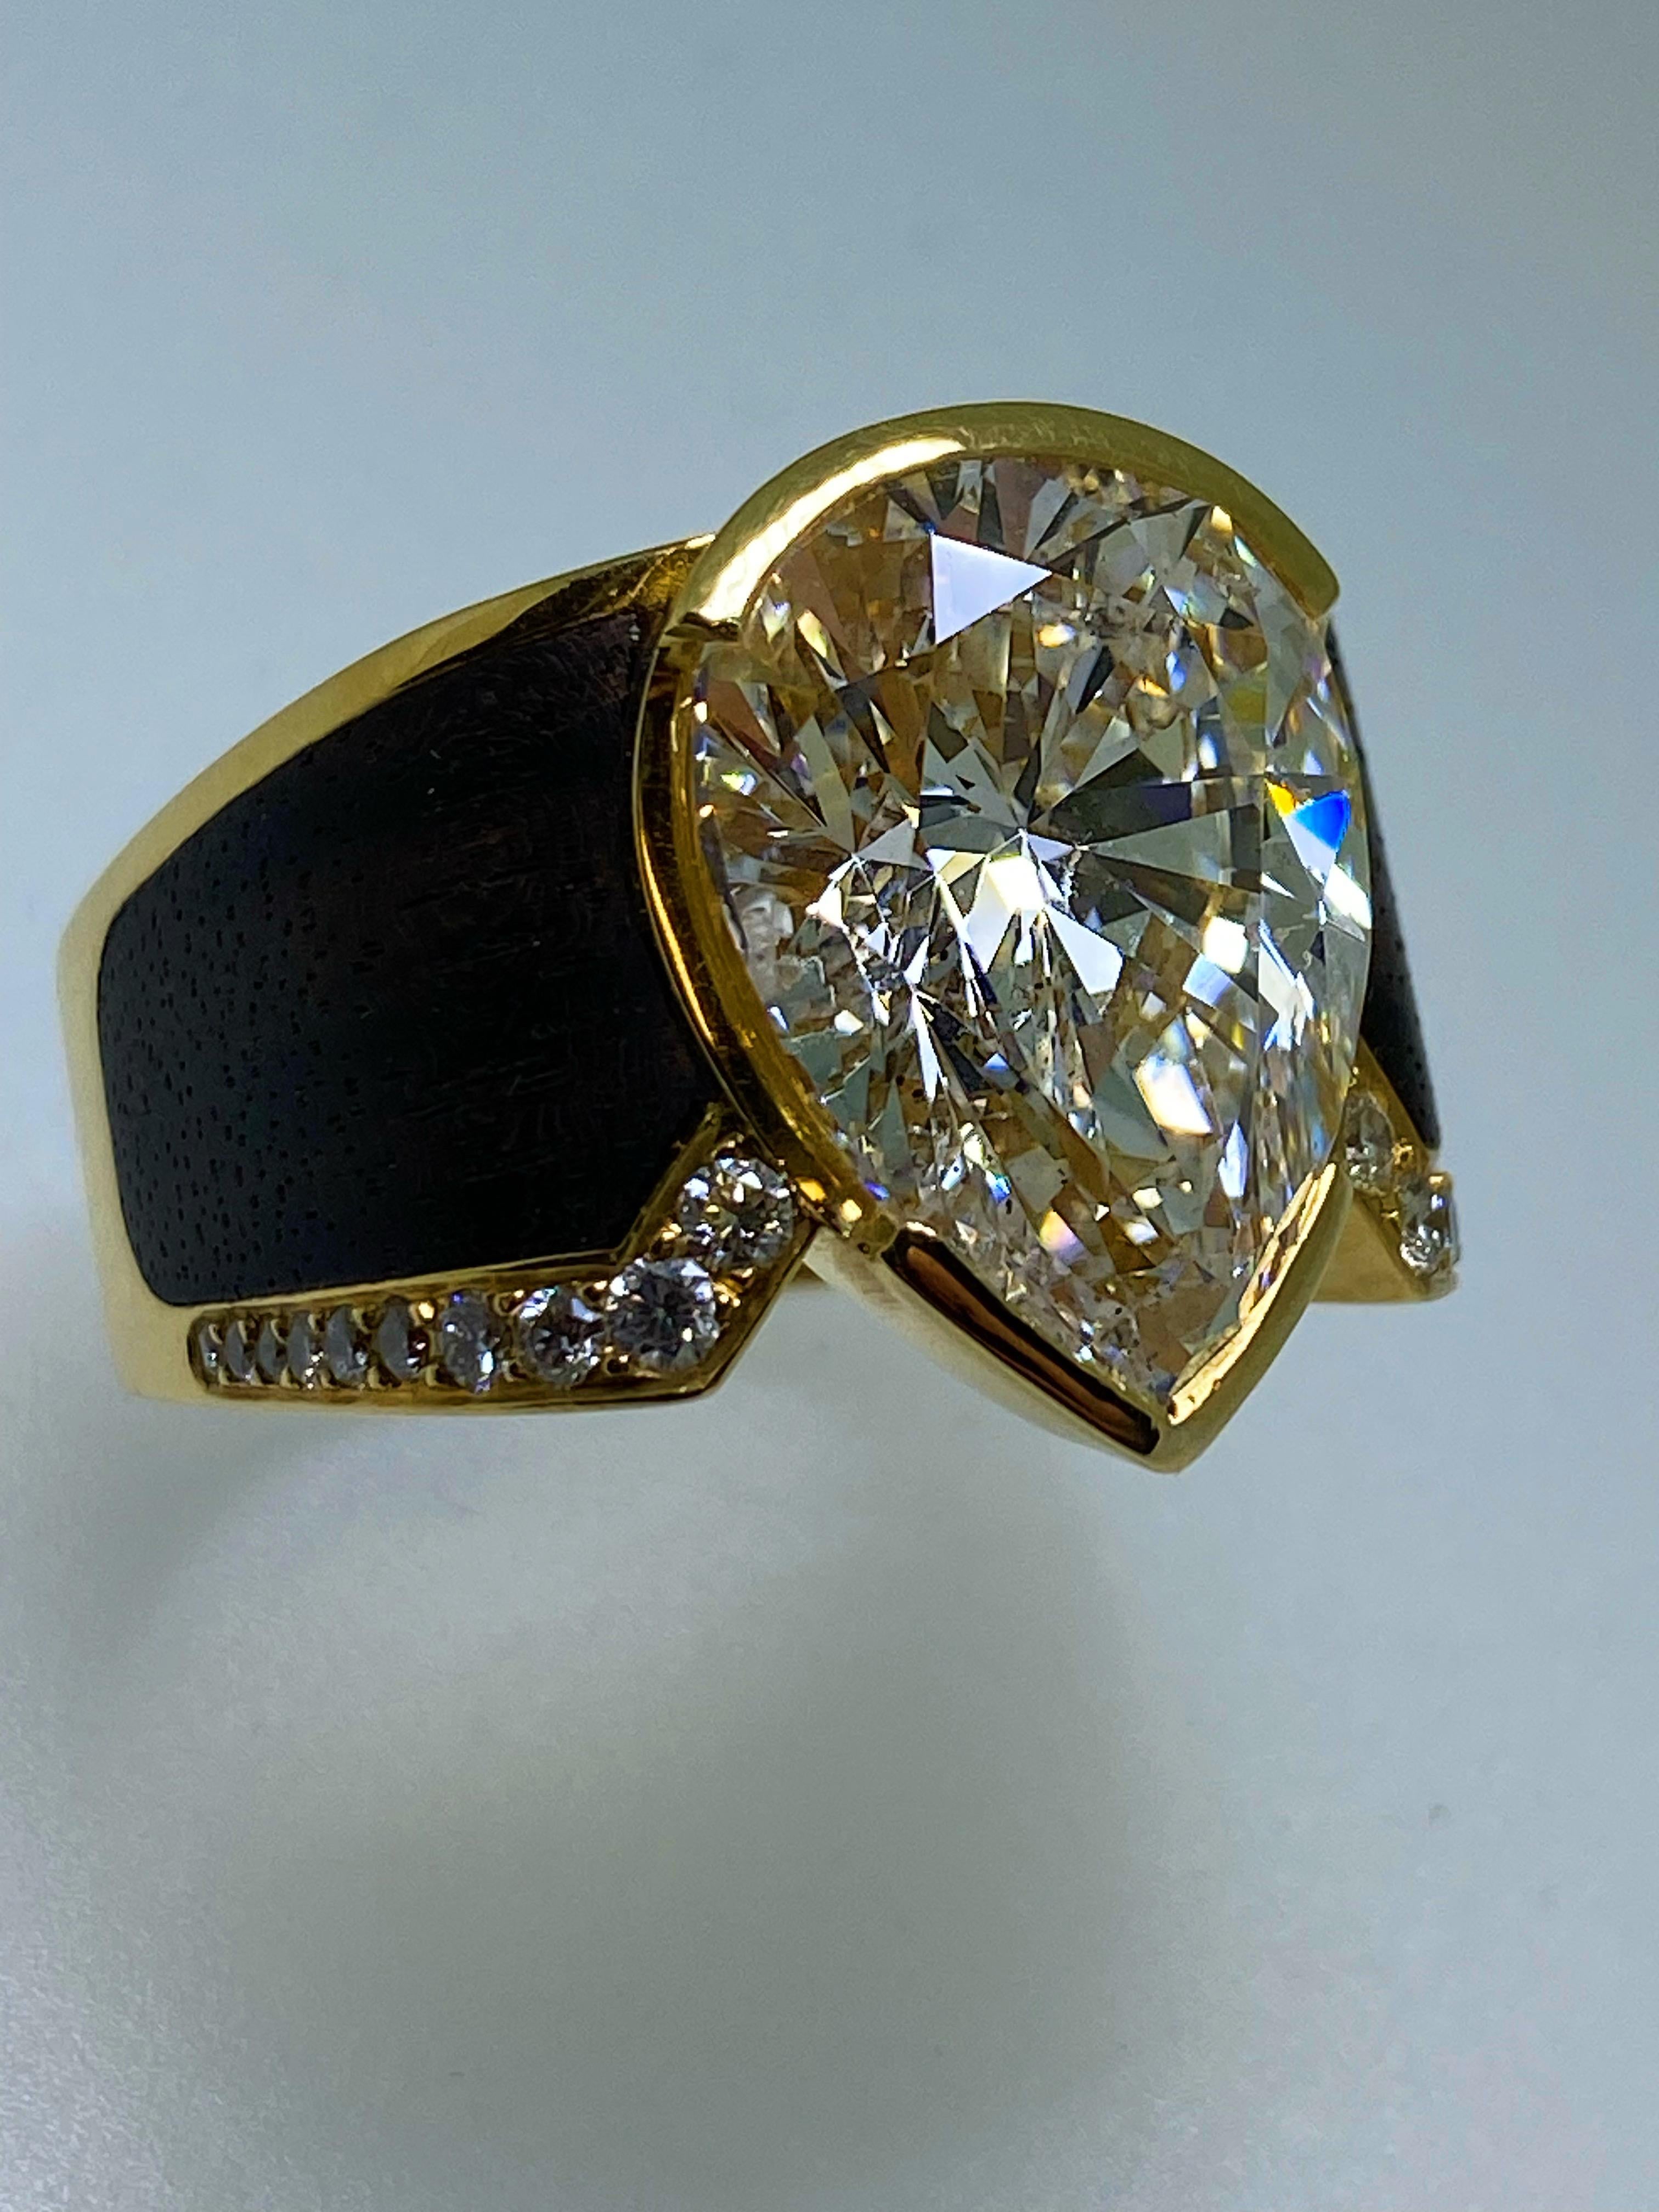 Pear Cut Natural 12.00ct Pear Shaped/Cut Diamond Ring in 18K Yellow Gold, valued at 490K